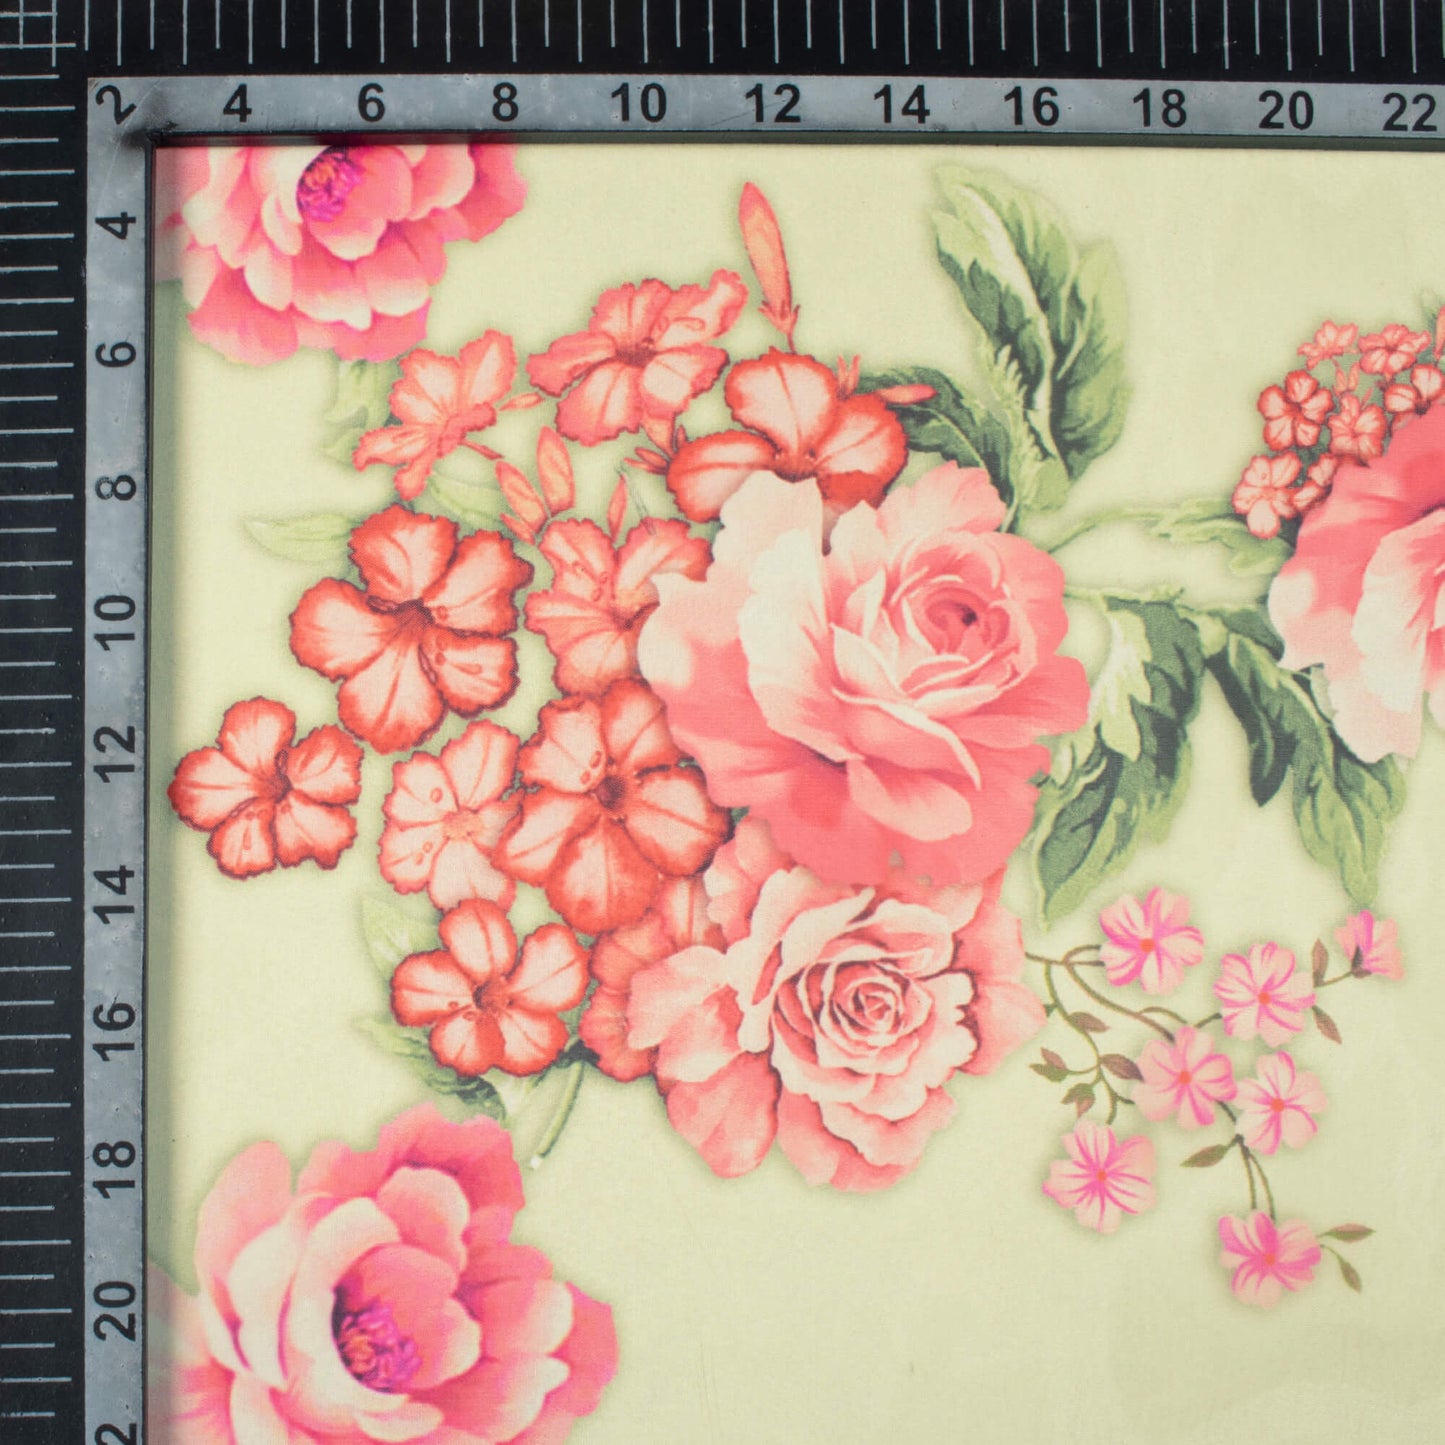 Pastel Avacado Green And Red Floral Pattern Digital Print Organza Satin Fabric